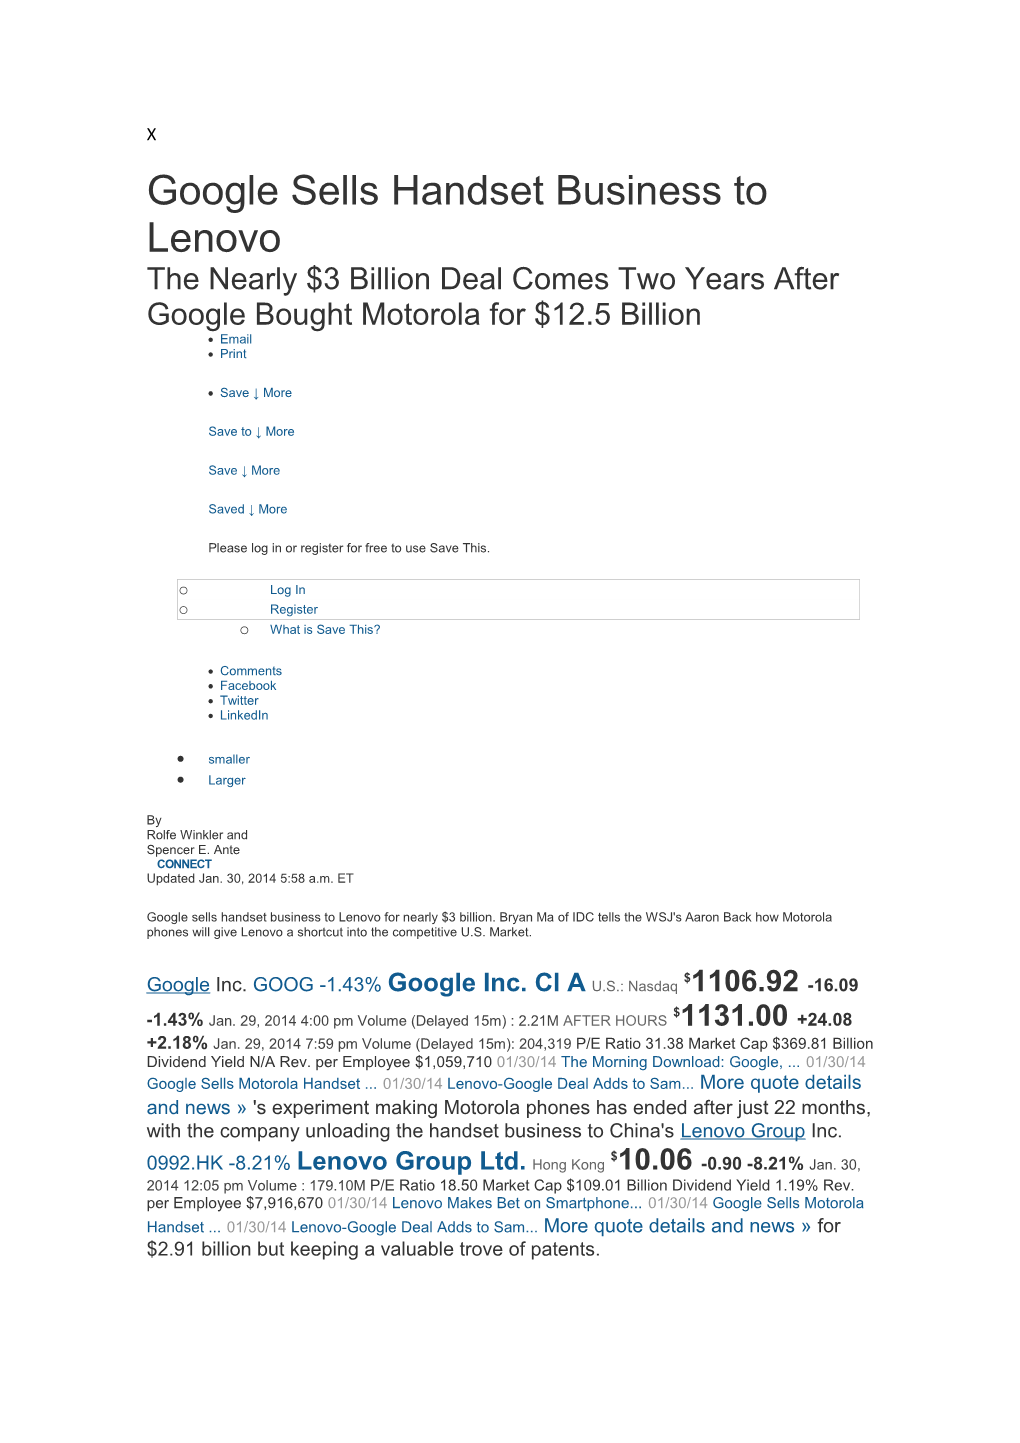 Google Sells Handset Business to Lenovo